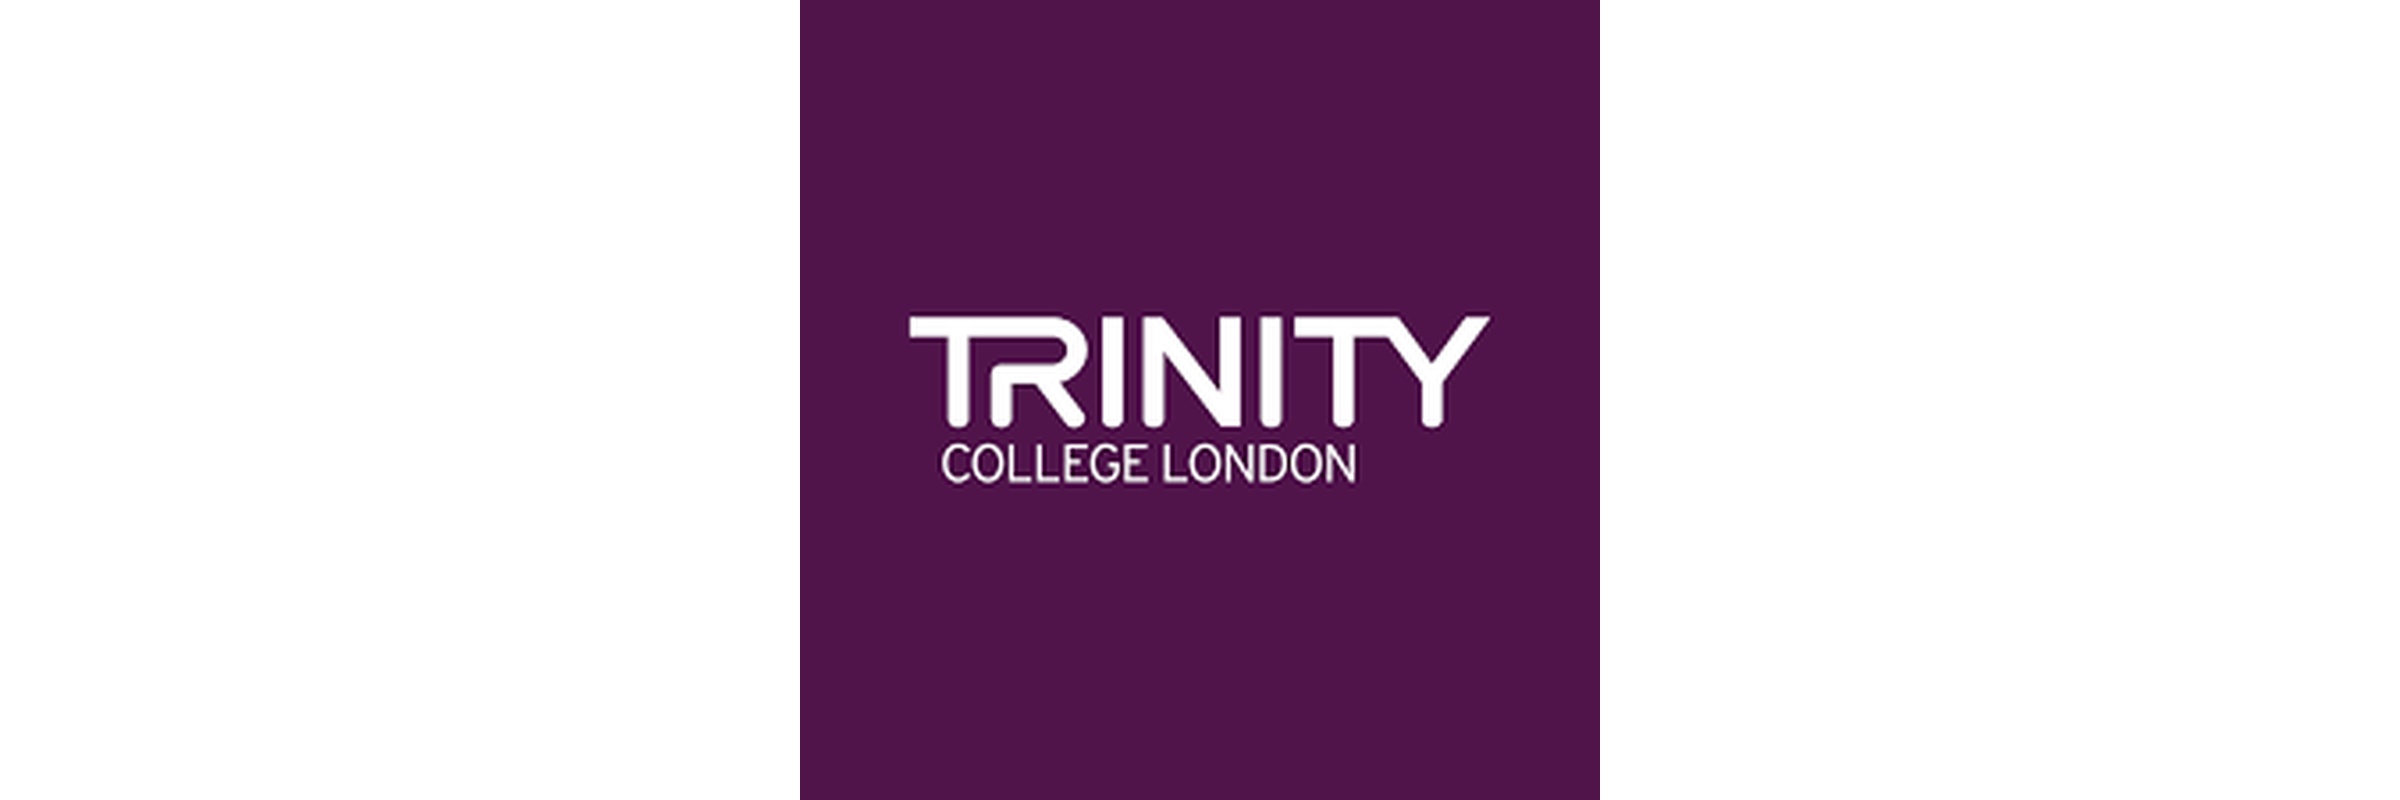 Shadi Sherif - Trinity college course personal matrial